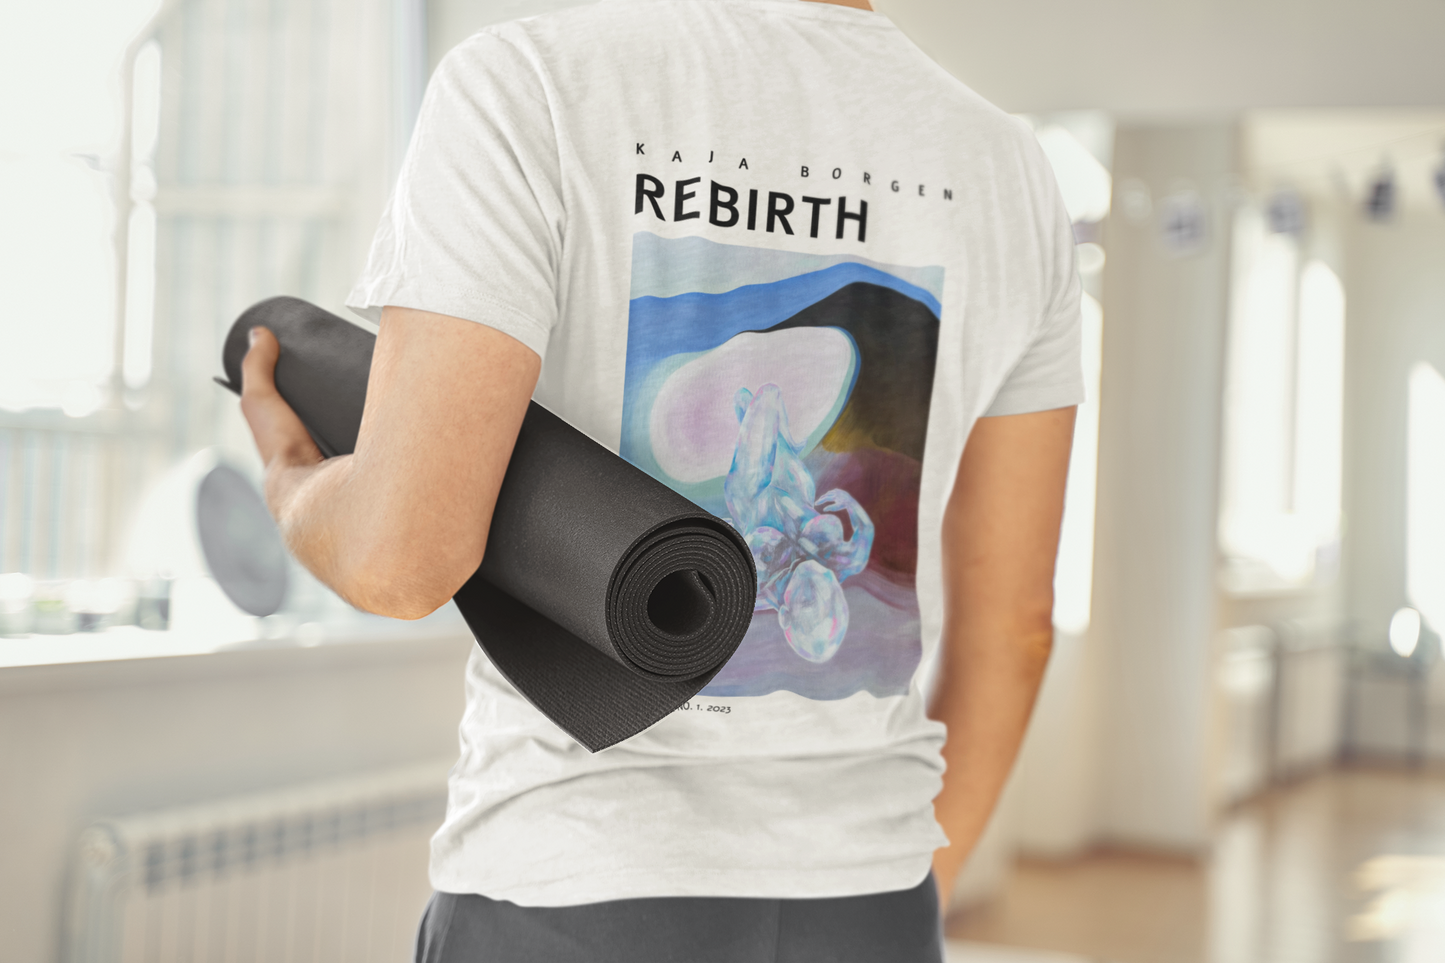 Rebirth Unisex T-shirt